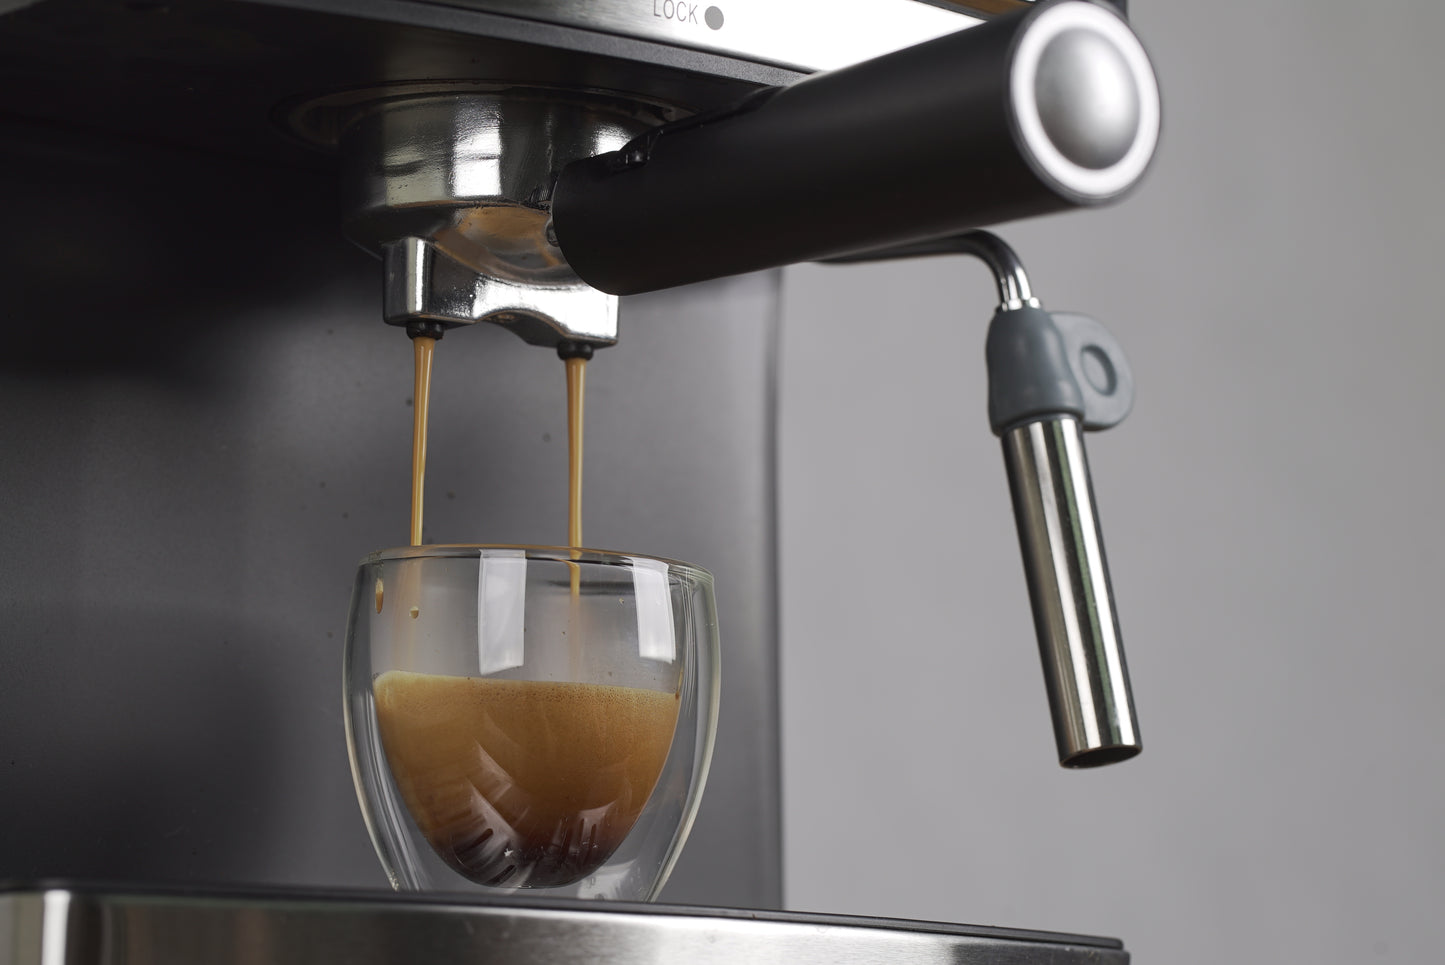 Portafilter Replacement for CEM-101 Personal Espresso Machine